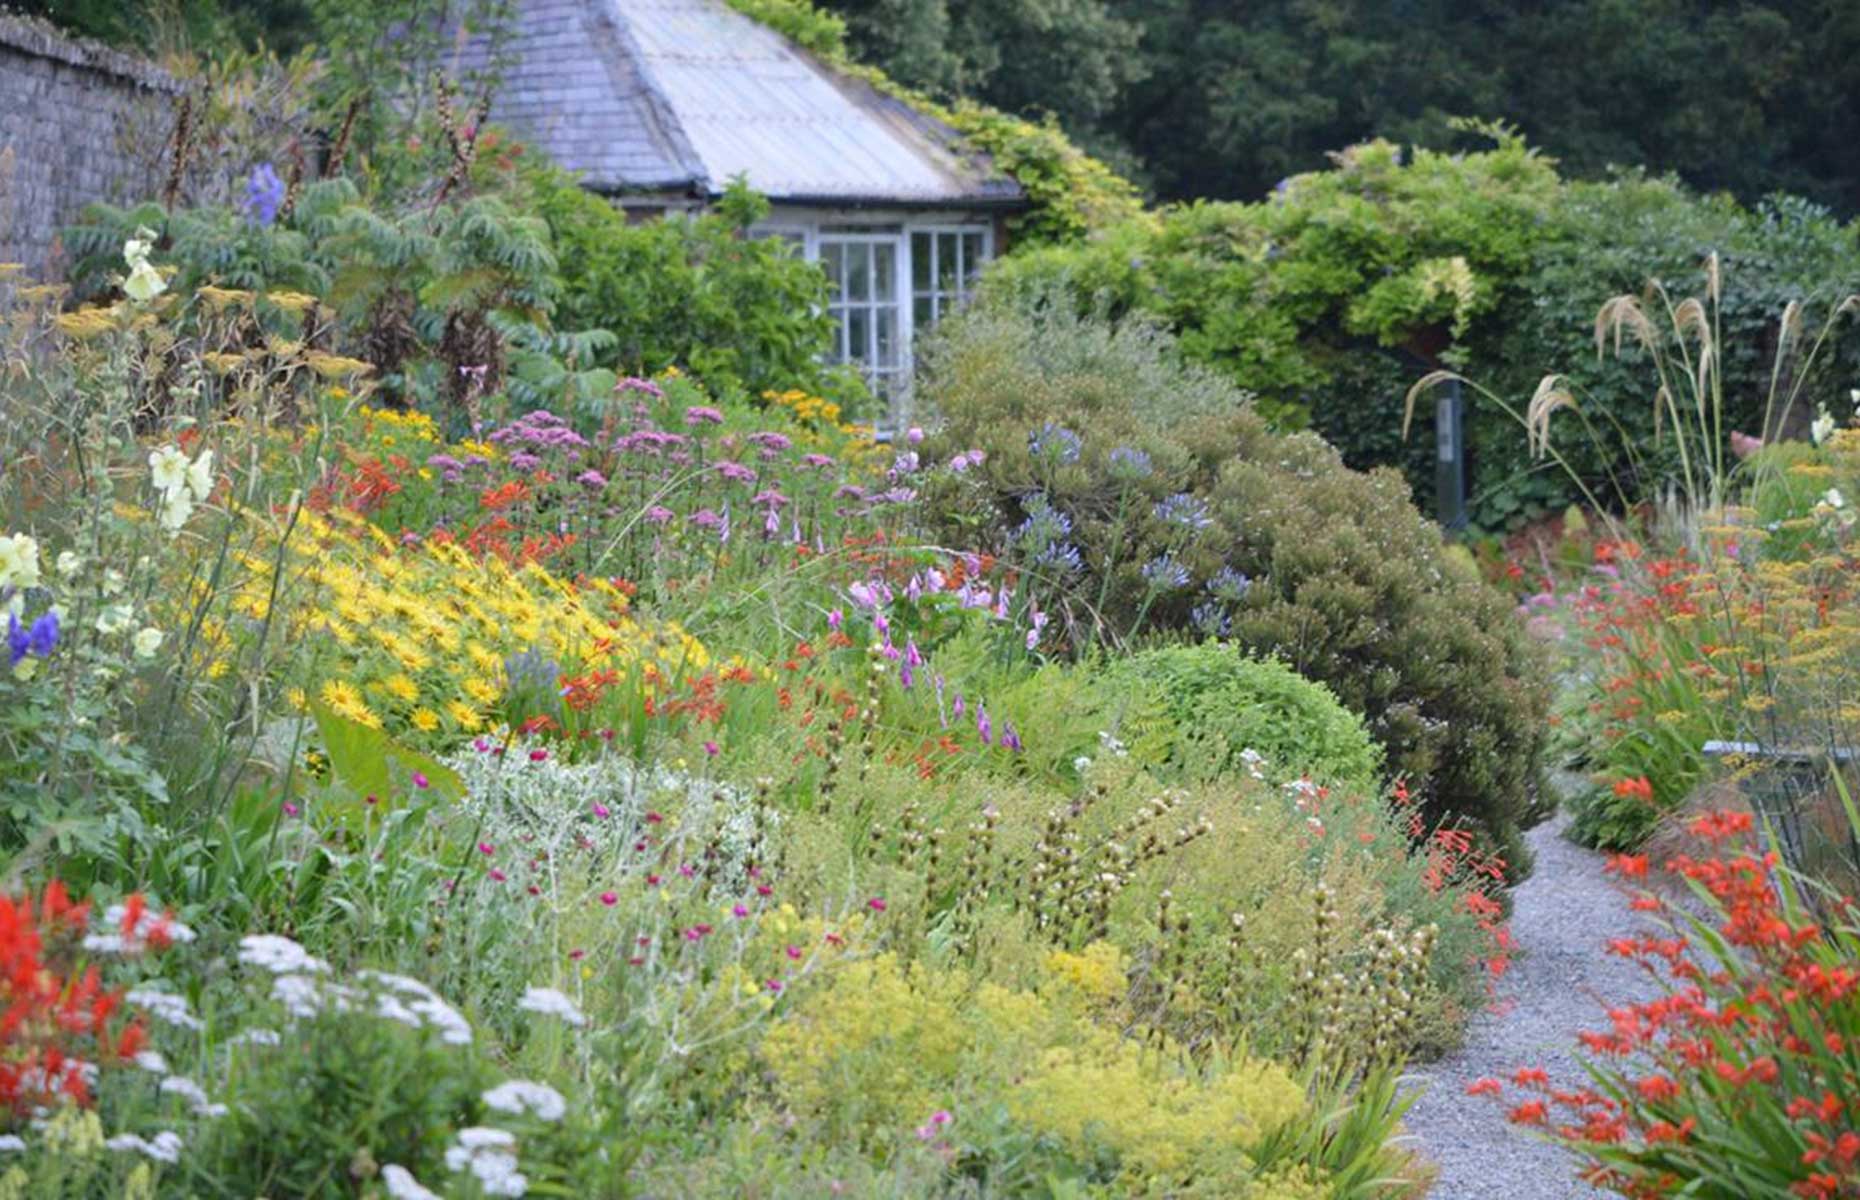 Beaulieu House has beautiful gardens in the Boyne Valley, Ireland